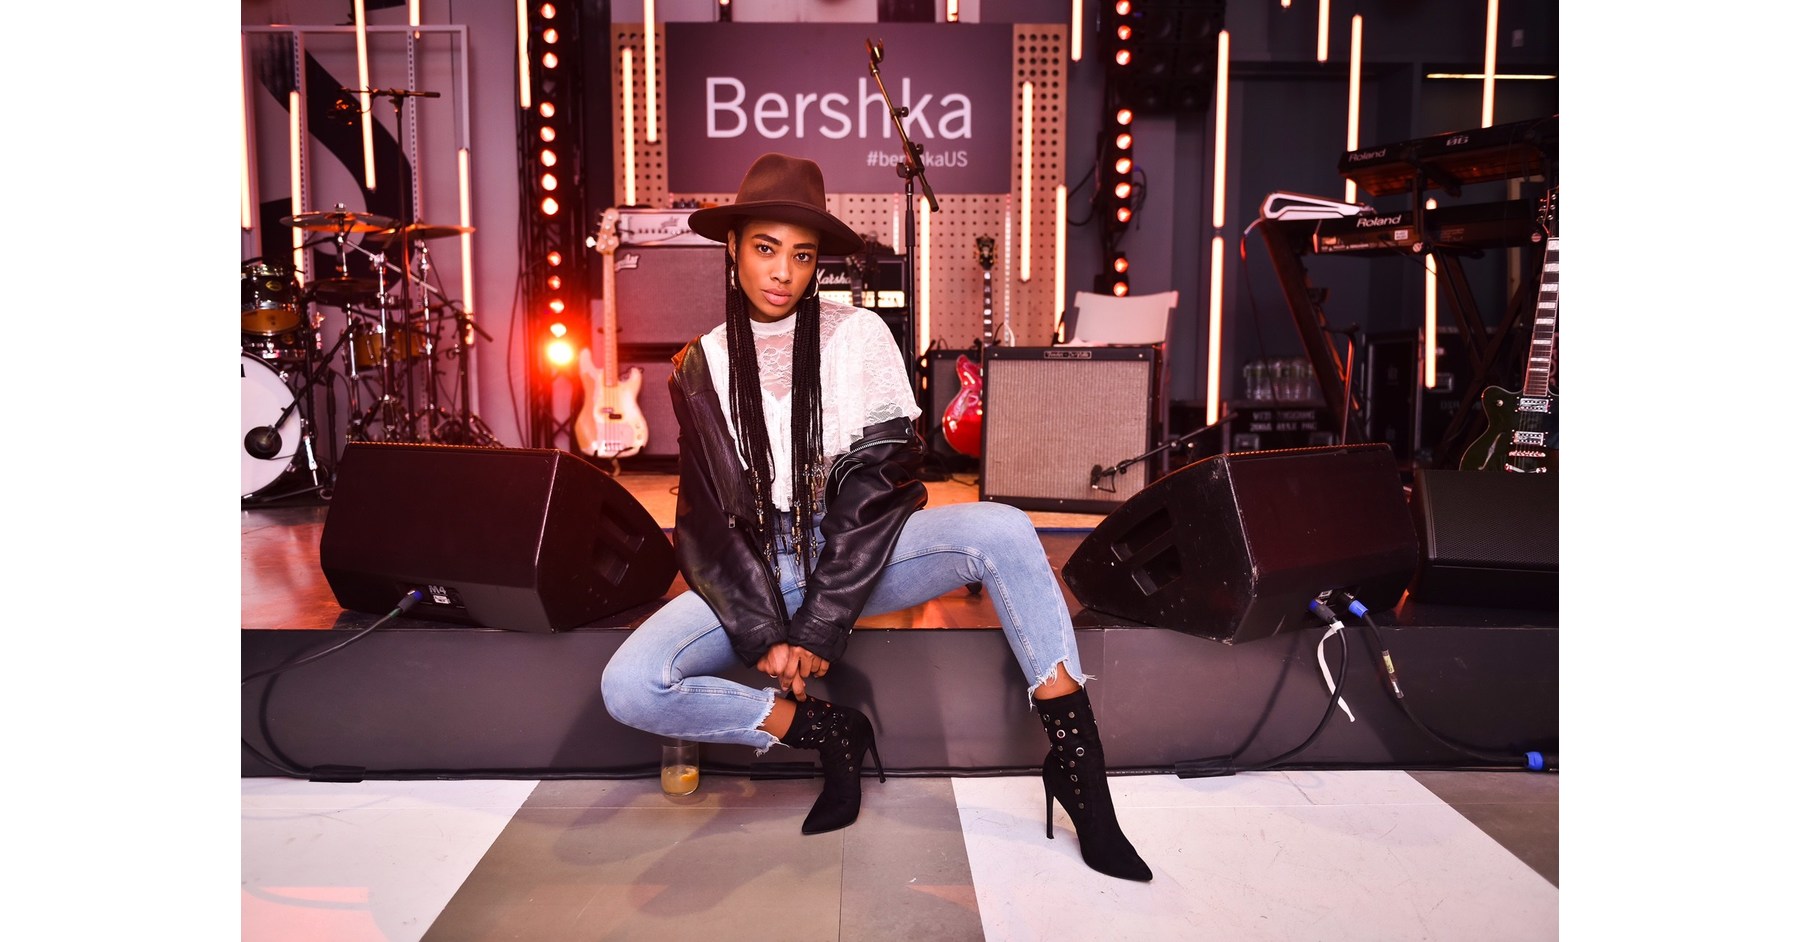 Bershka España online fashion for women and men - Buy the latest